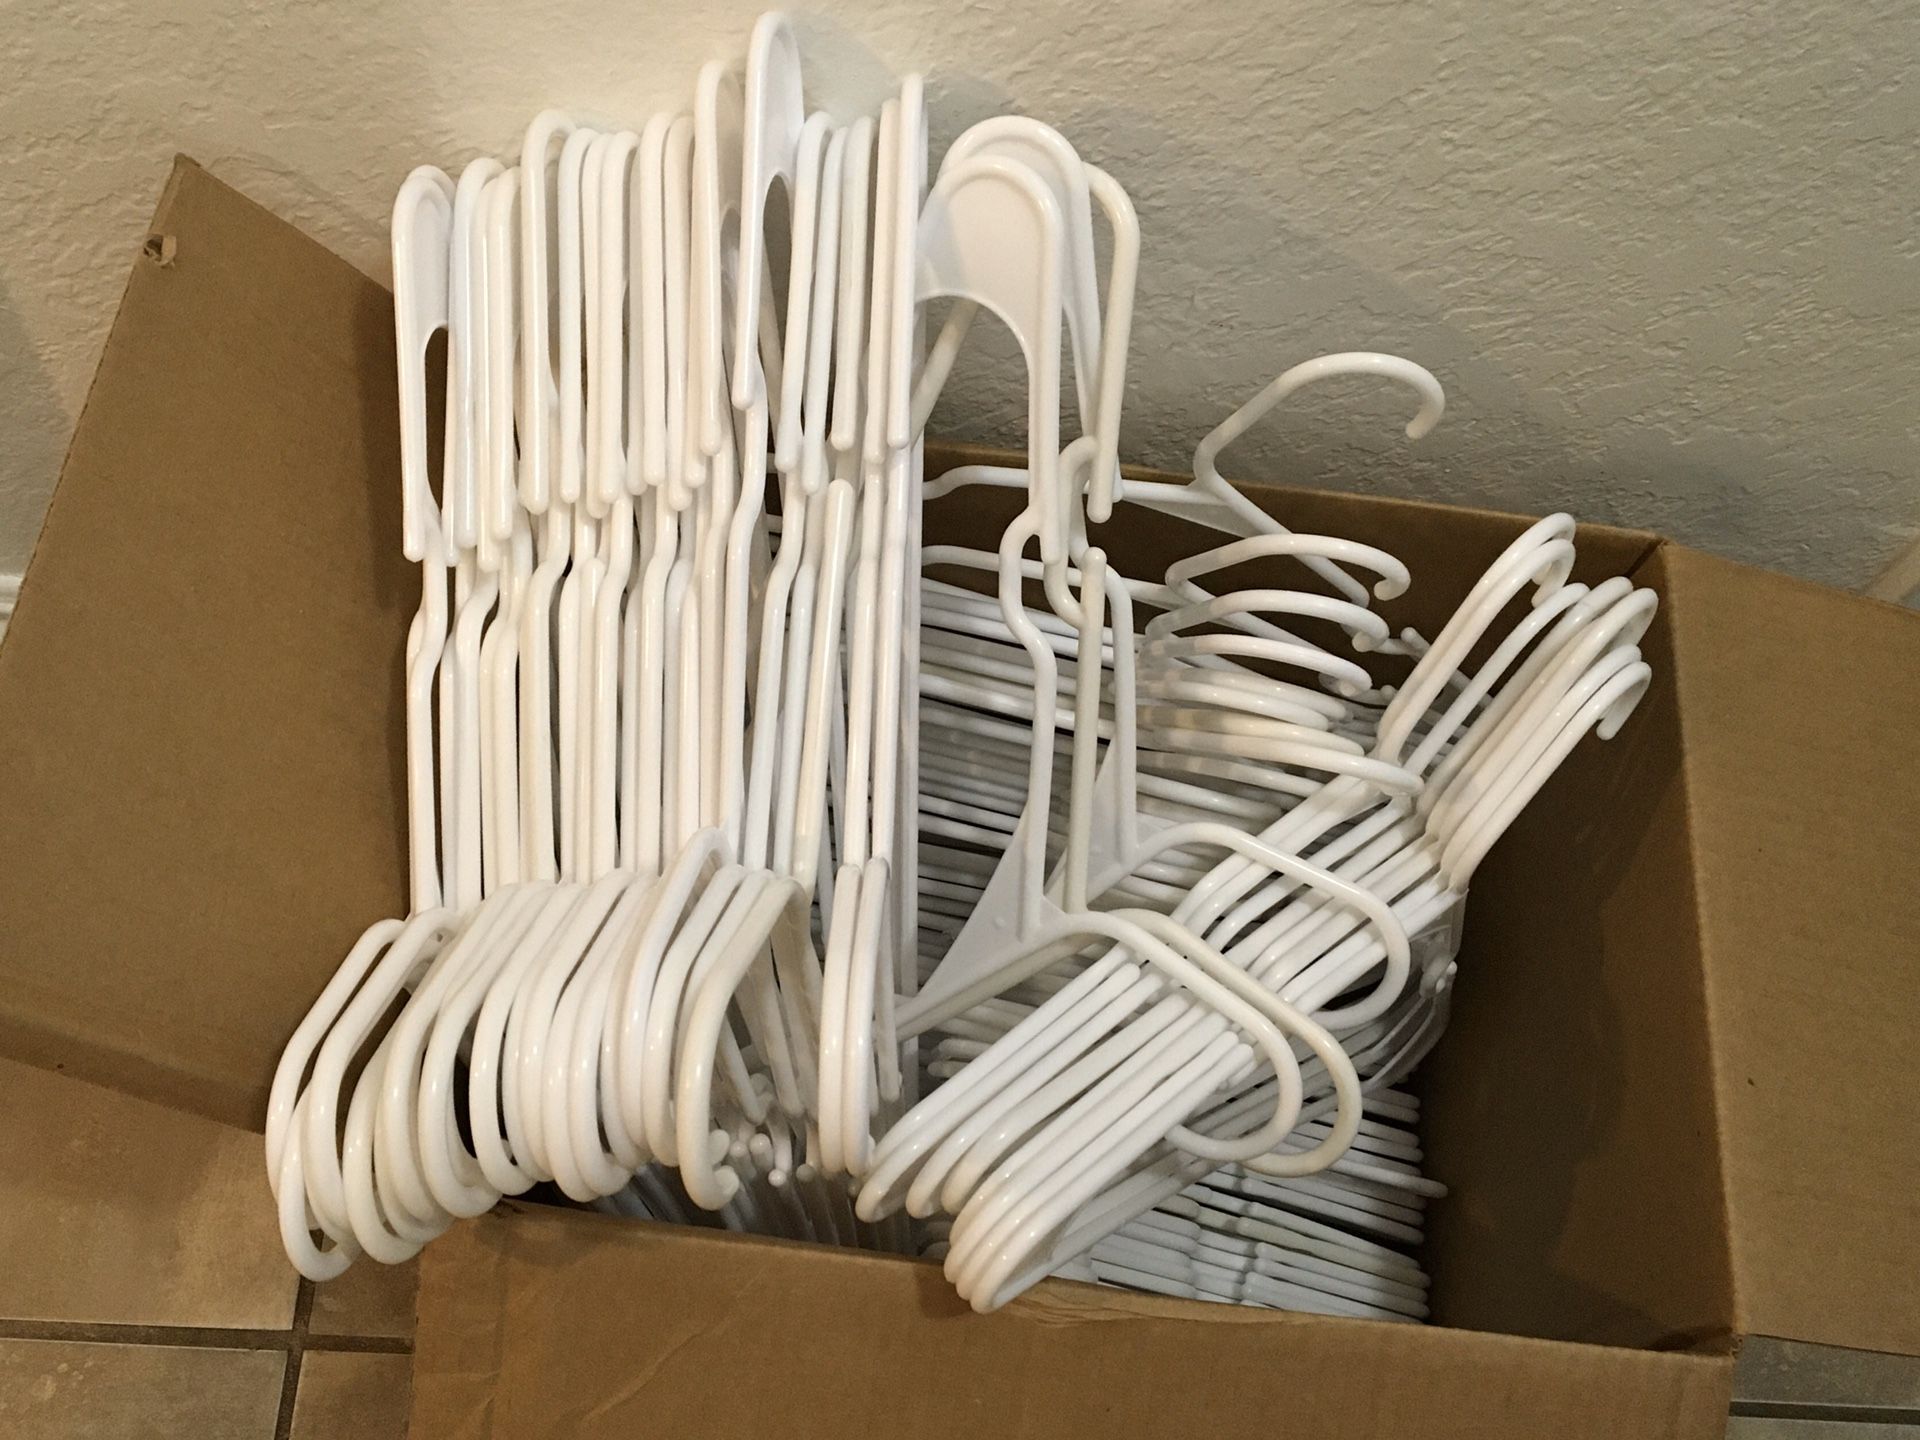 80 Plastic Hangers